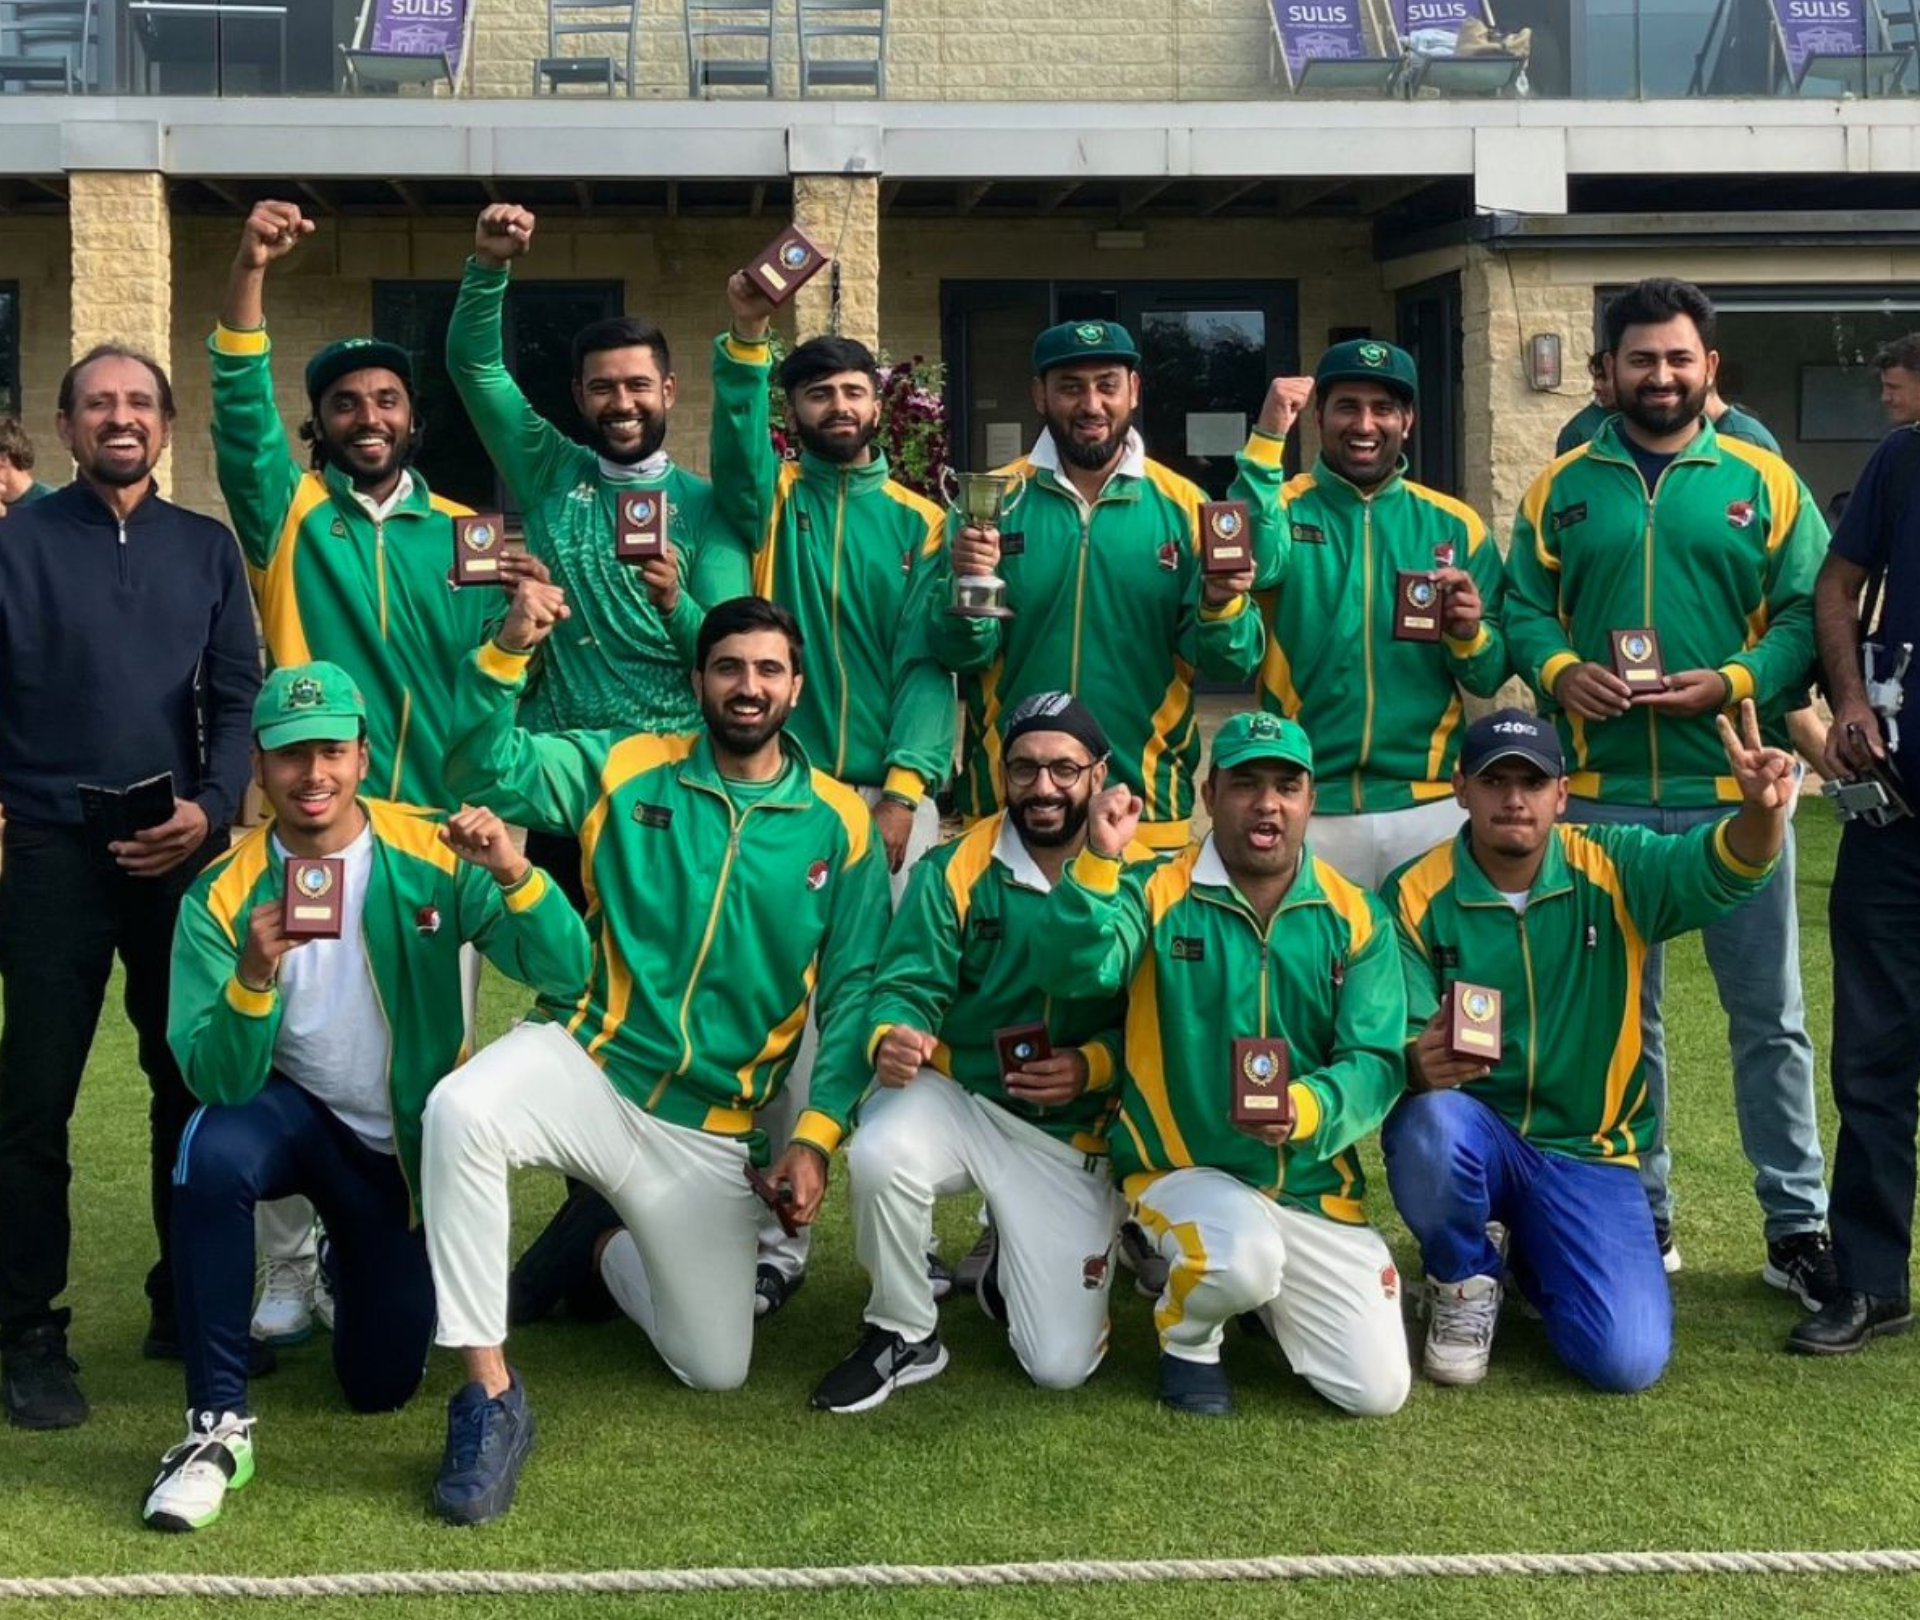 Bristol Pakistanis County Trophy Winning Team Photo